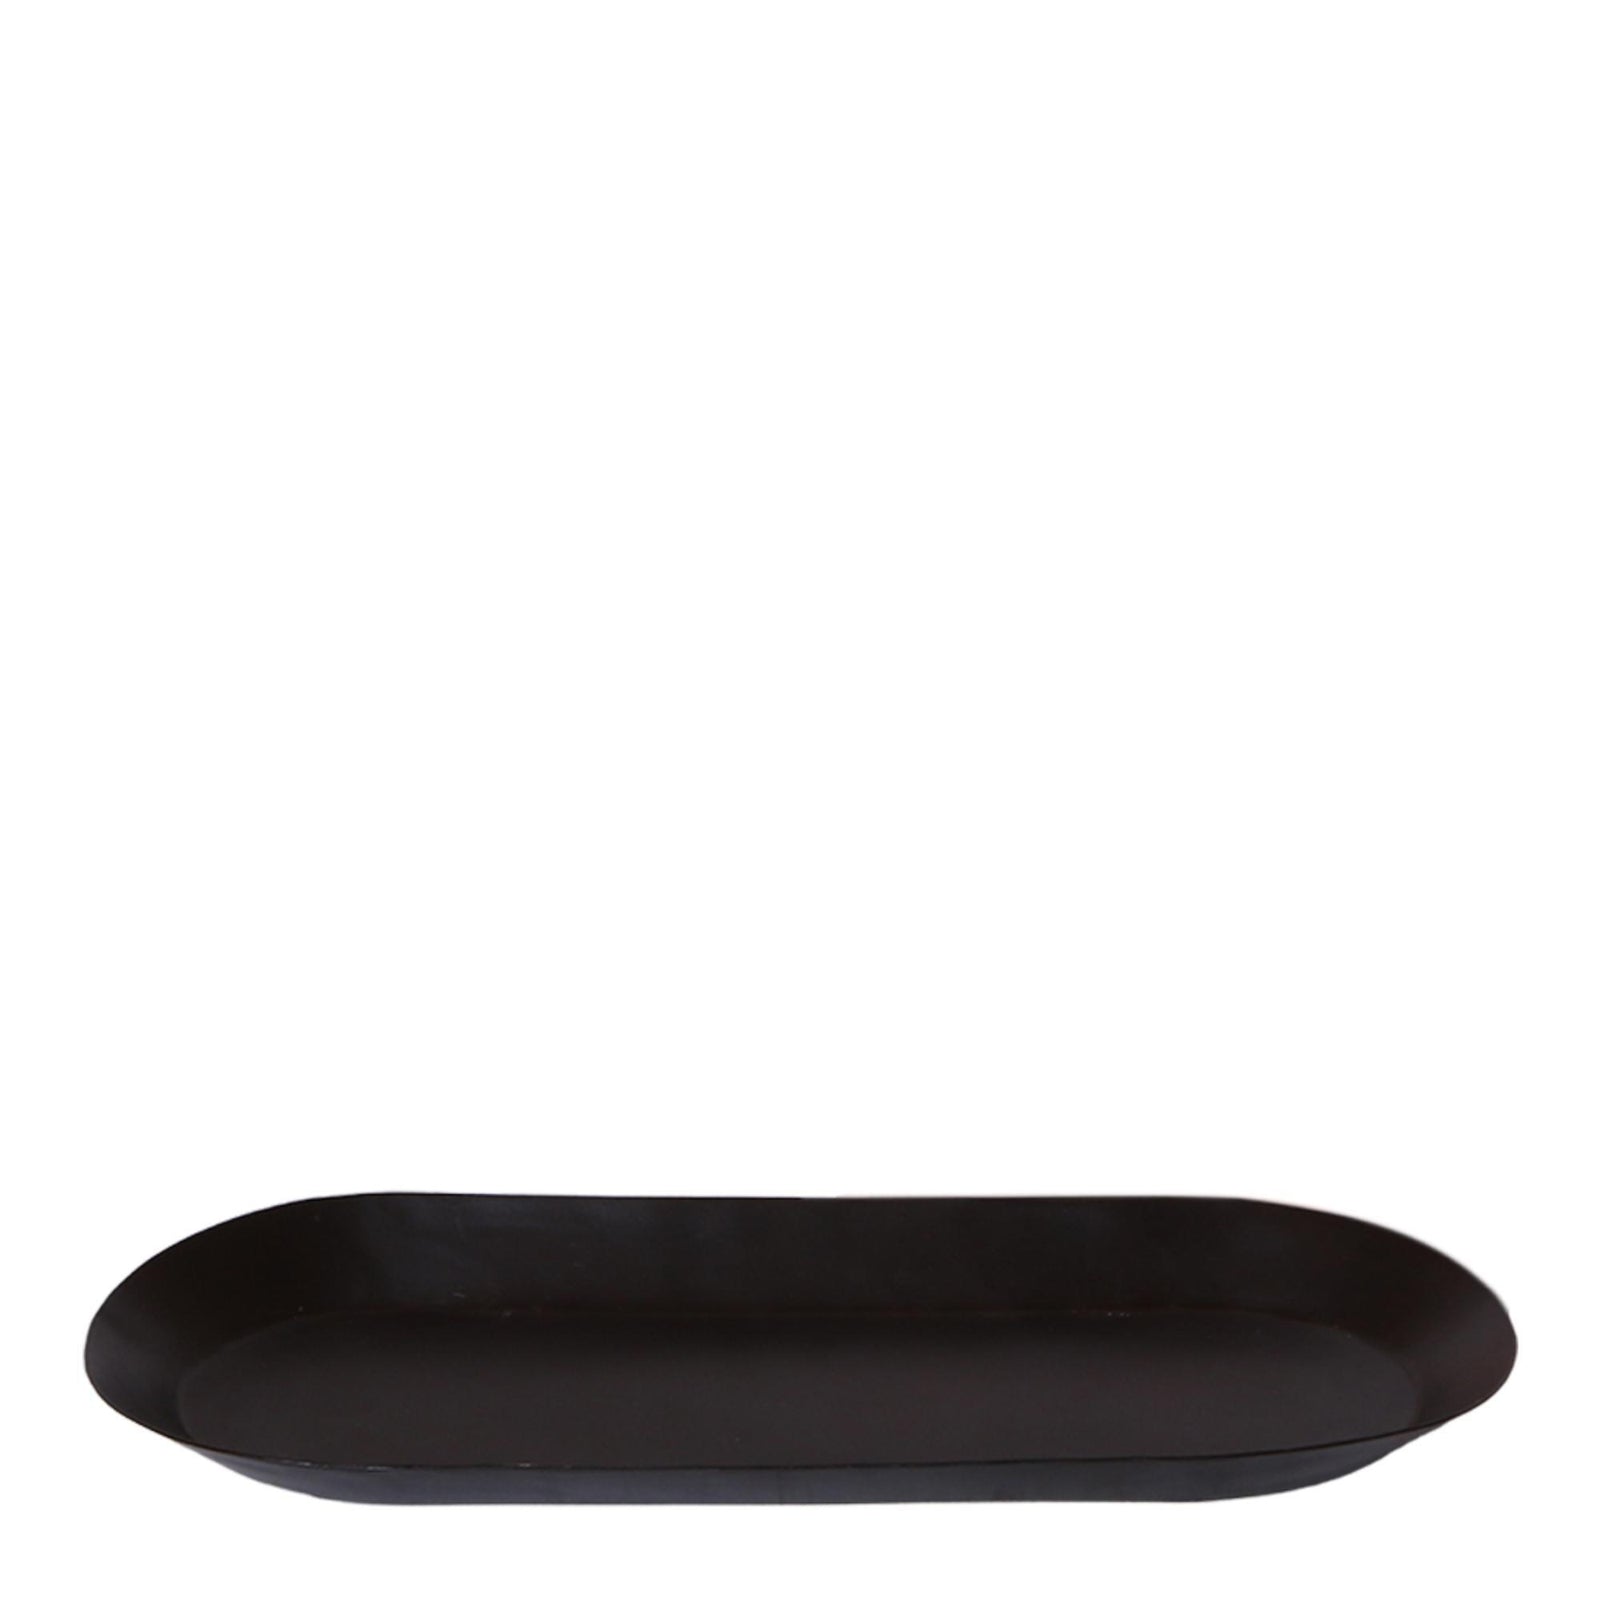 Kolibri Home | Plate oval -  Zwarte ovale dienblad Ø30cm